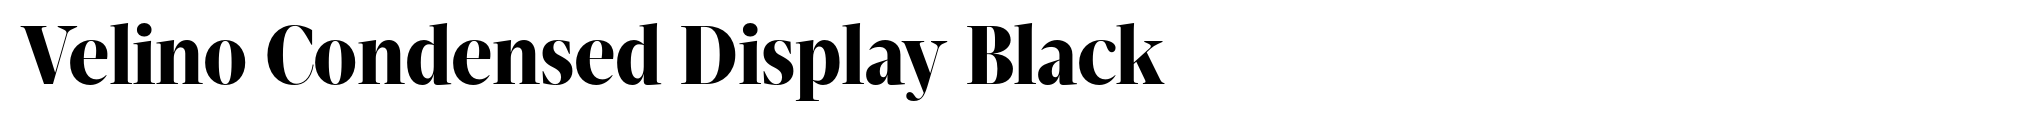 Velino Condensed Display Black image